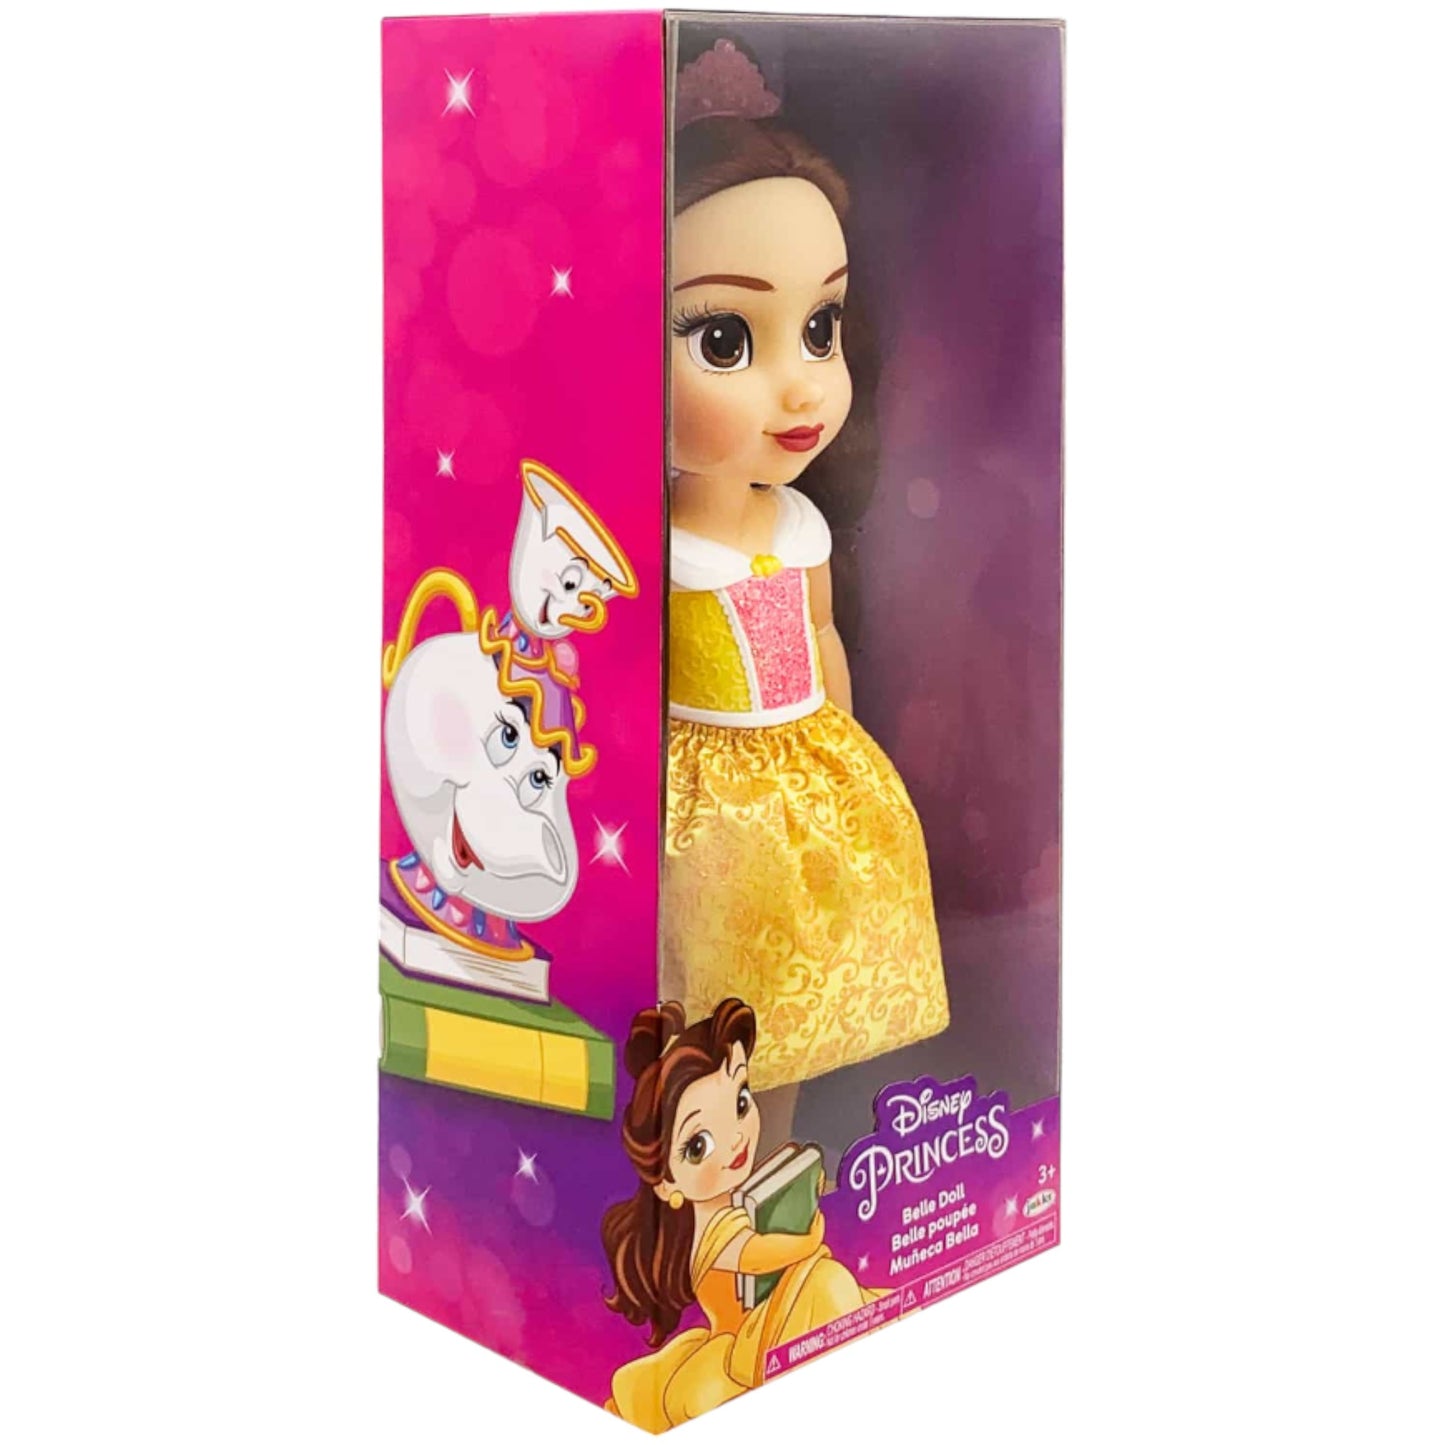 Disney Princess 14" Doll - Belle